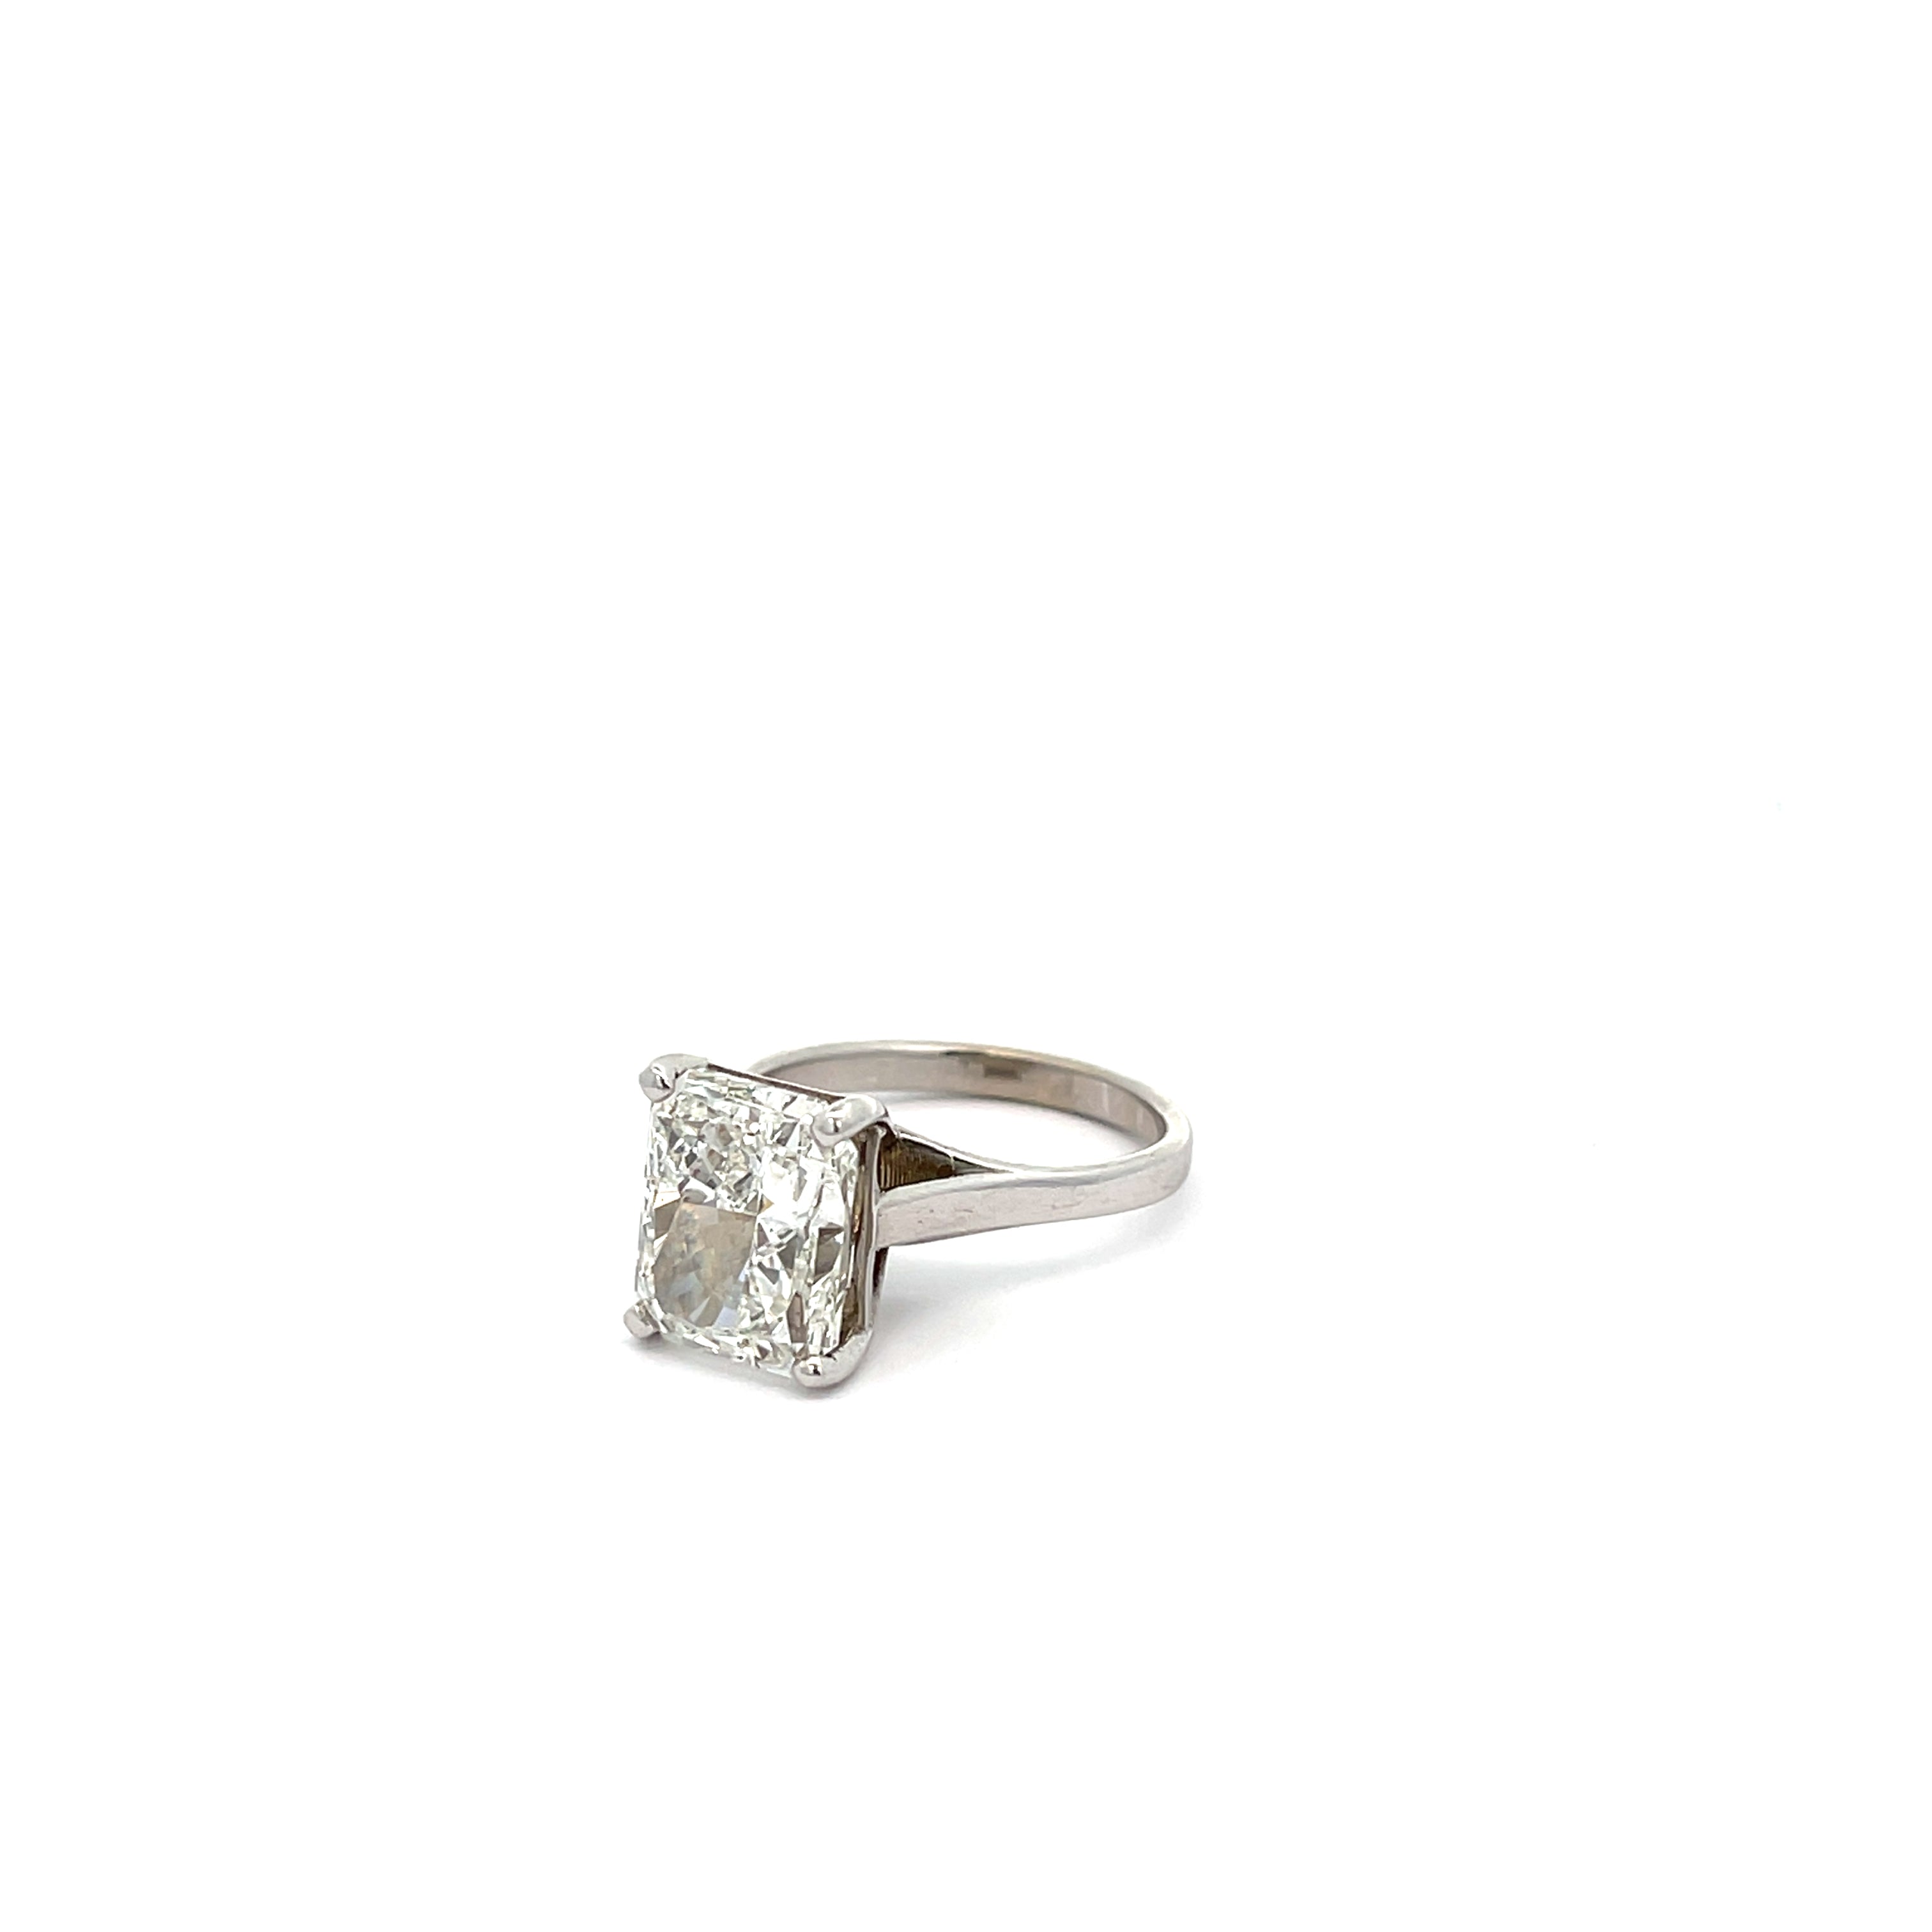 The Davenport 18k White Gold Radiant Cut Engagement Ring